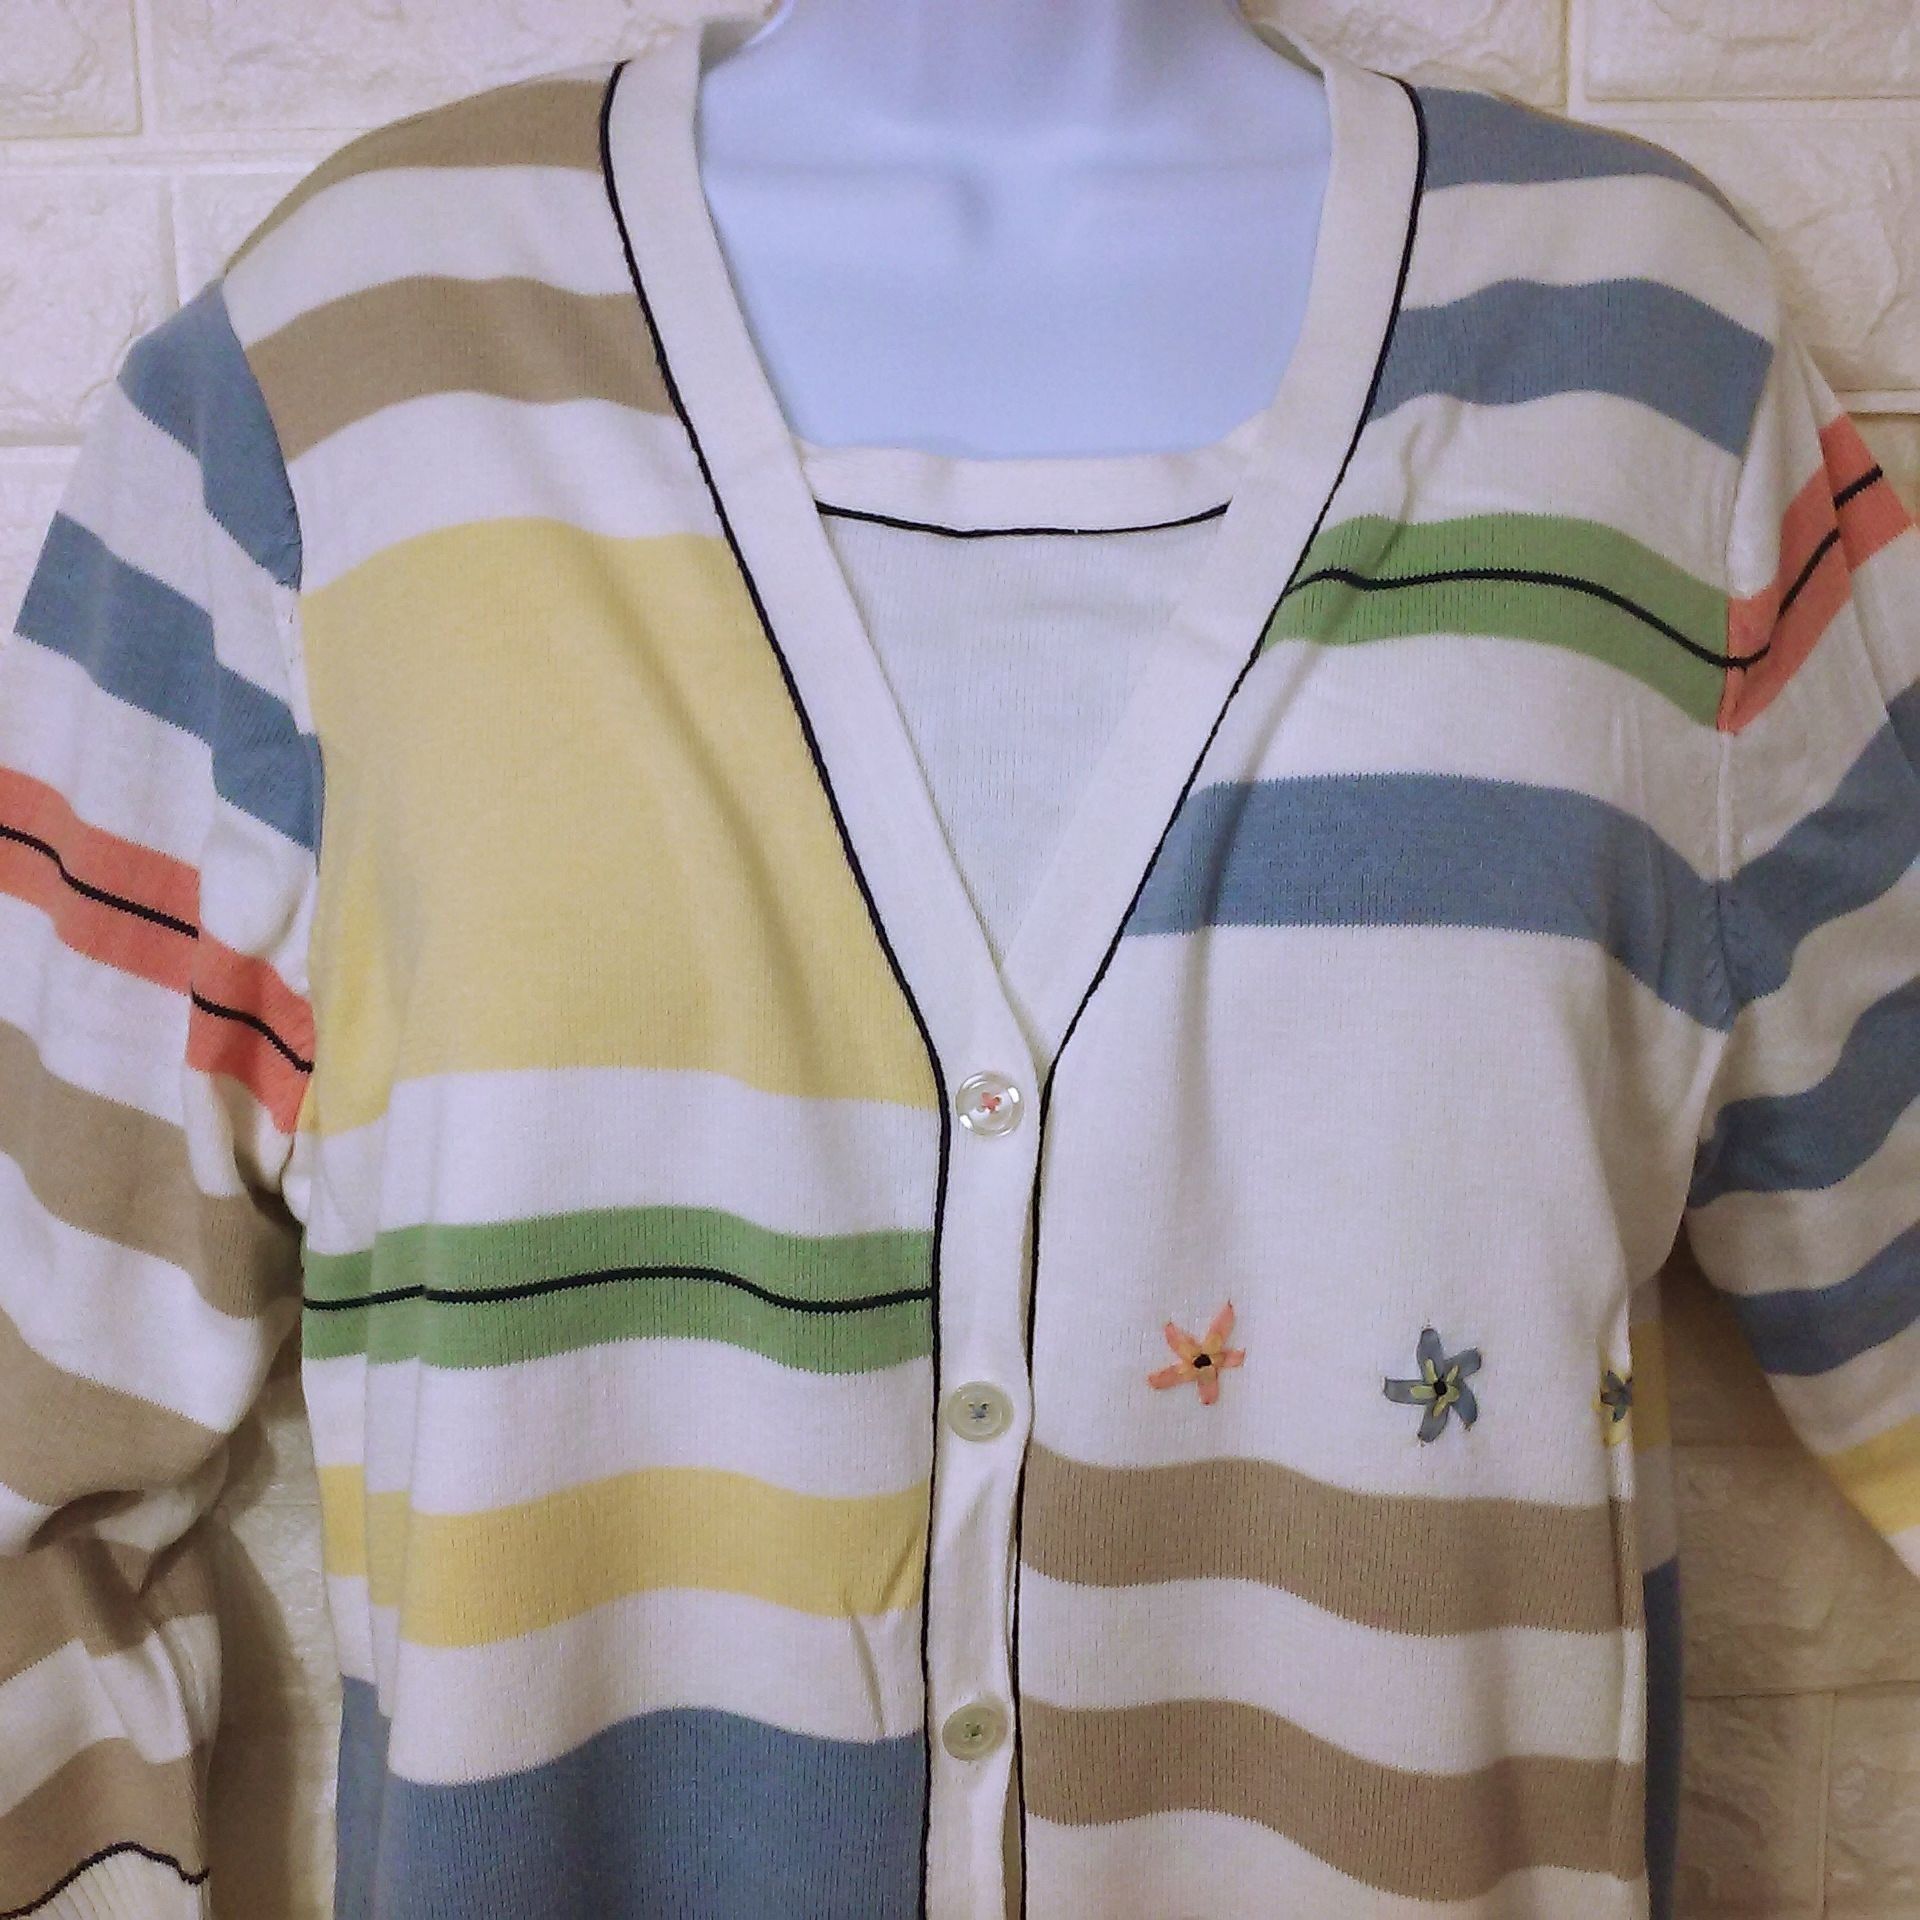 Vintage 90s Koret Knit Cardigan Top Novelty Sweater Striped Classic Size L / US 10 / IT 46 - 4 Thumbnail